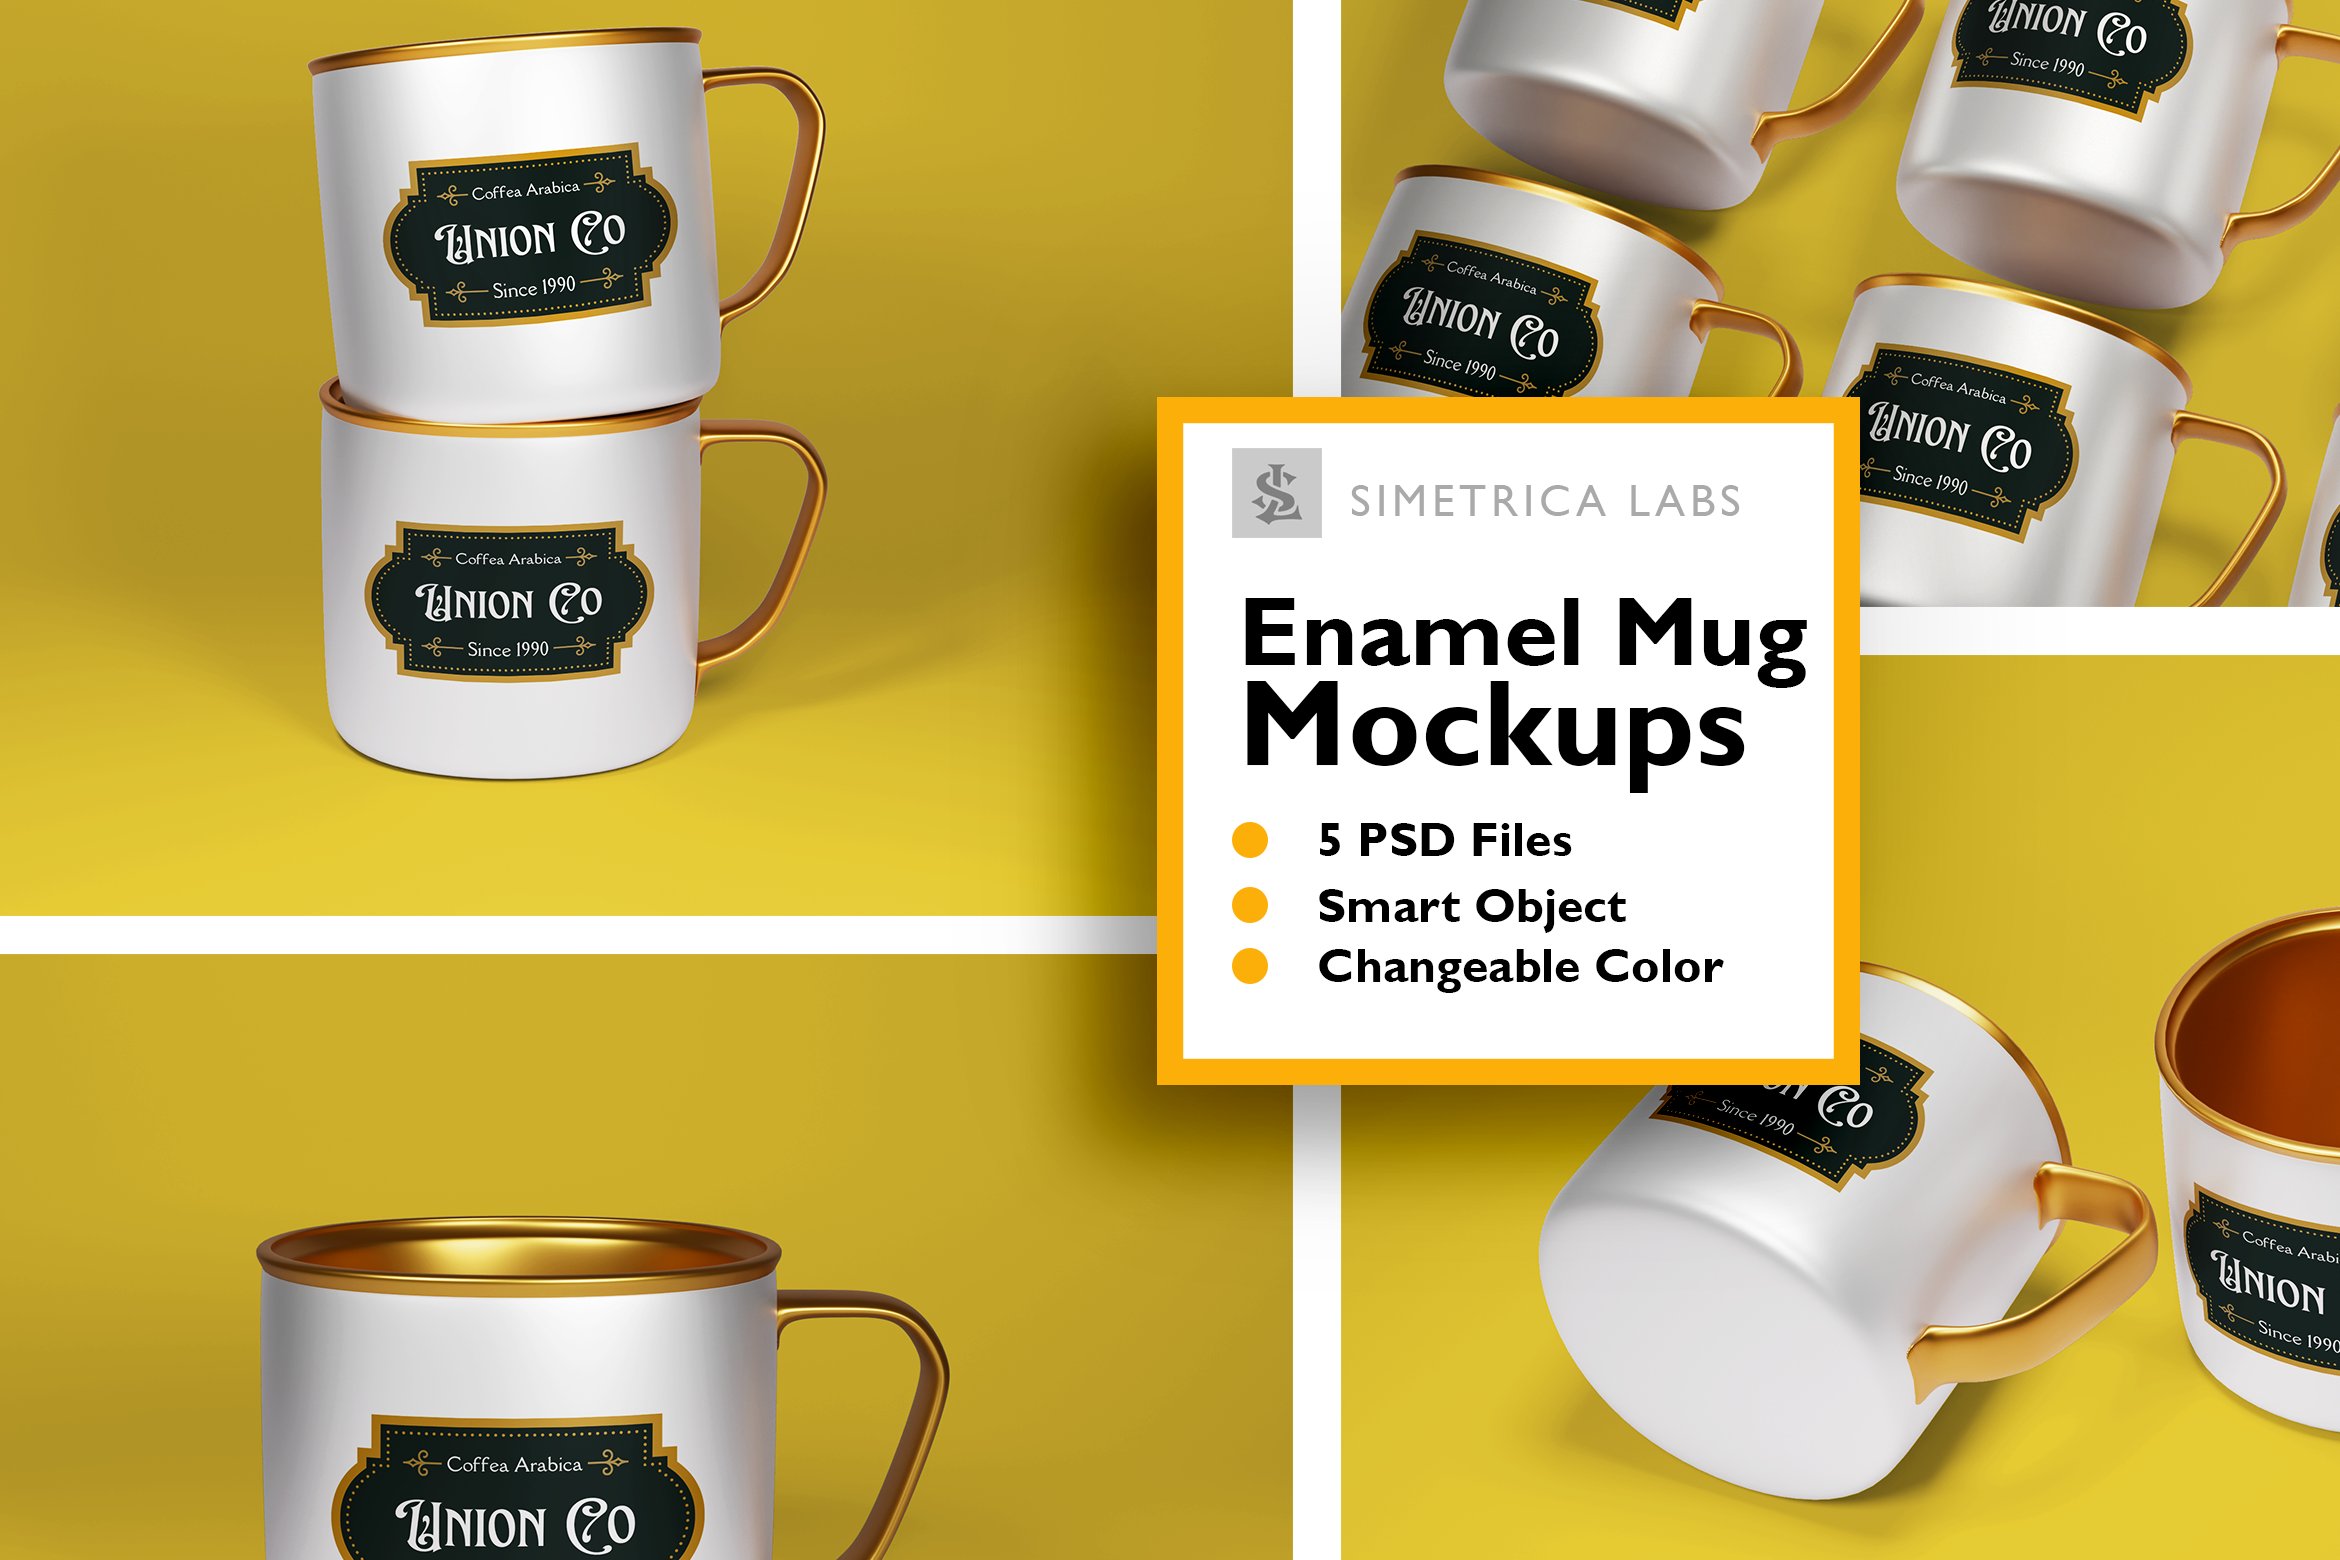 Enamel Mug Mockup Collection cover image.